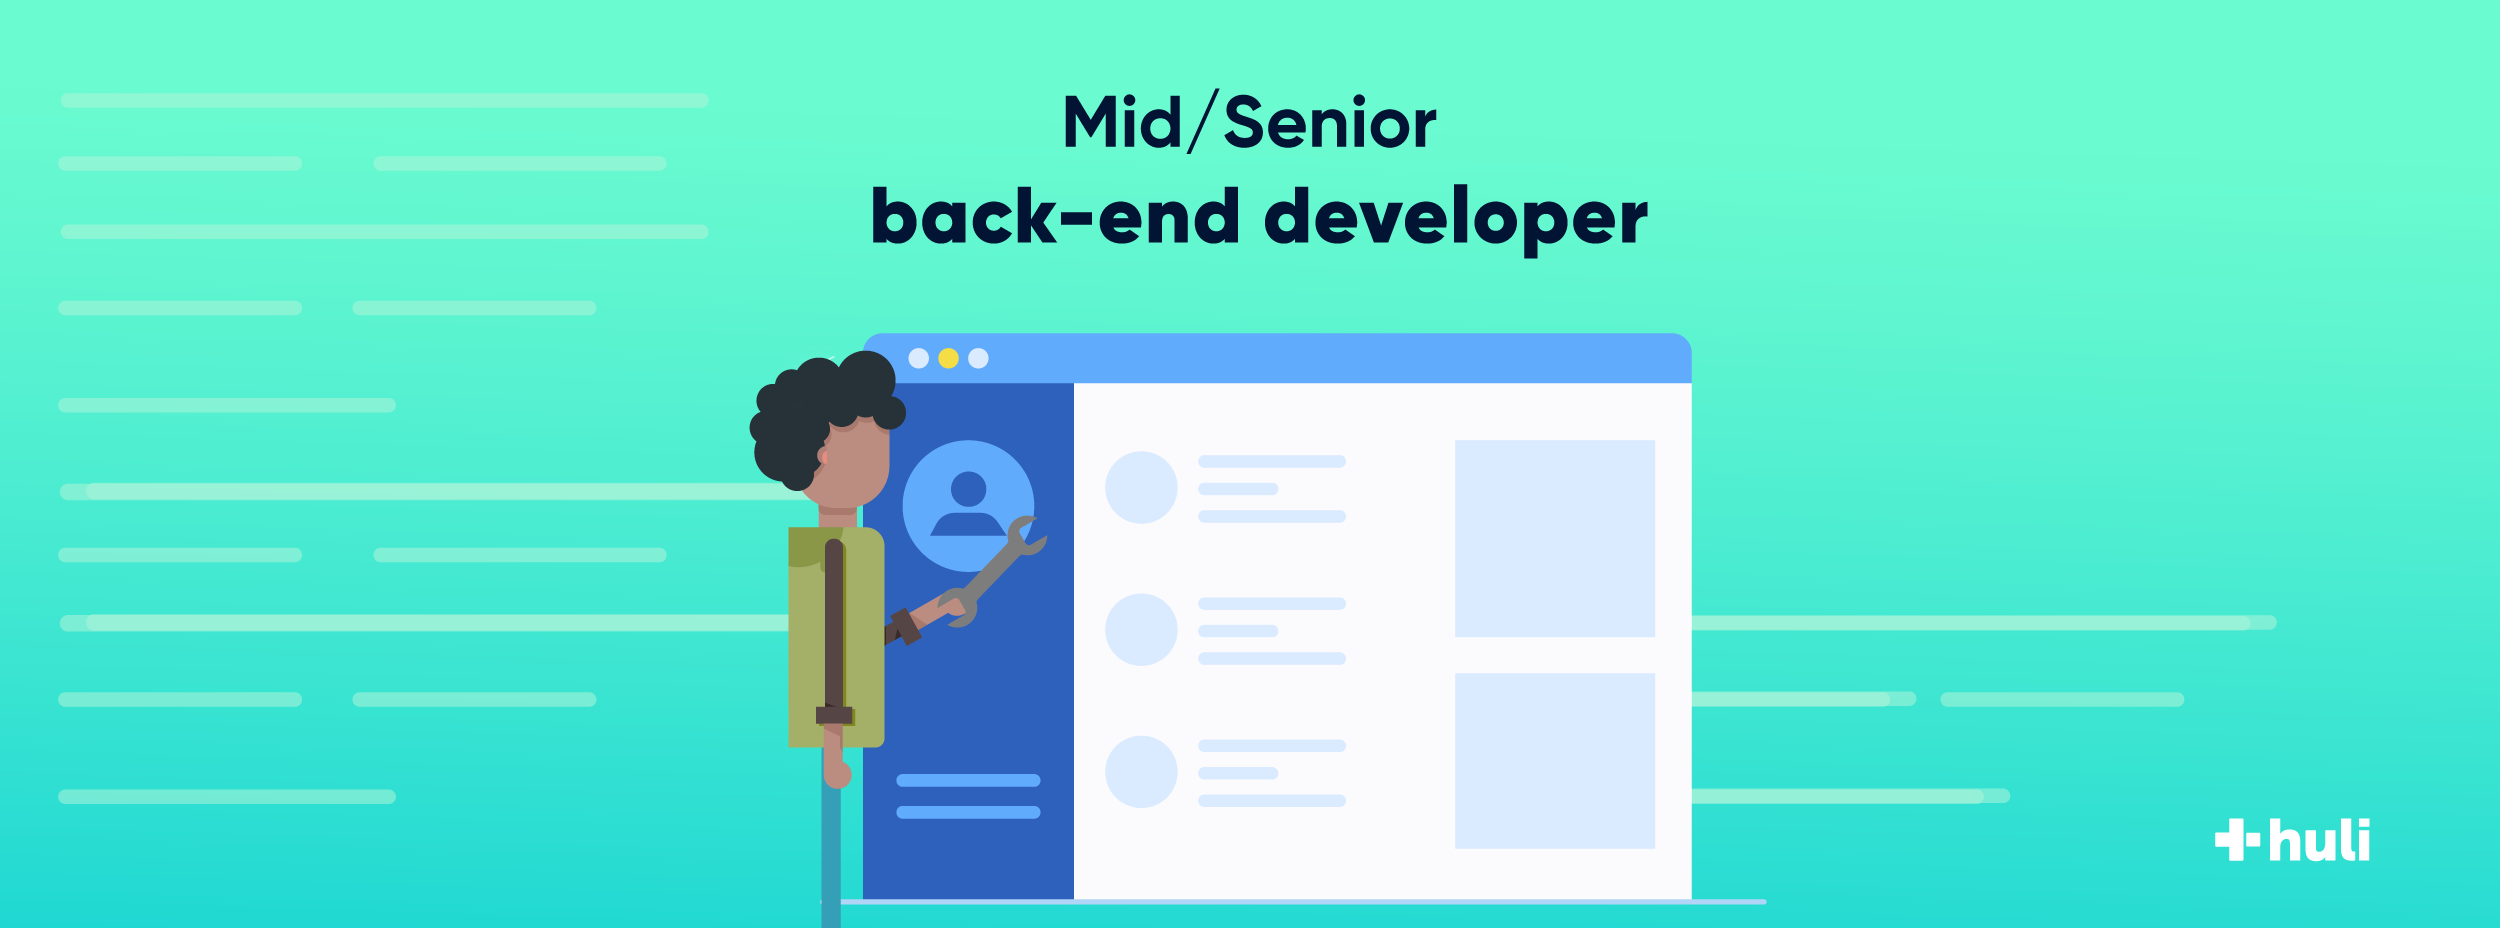 Buscamos Mid/Senior back-end developer